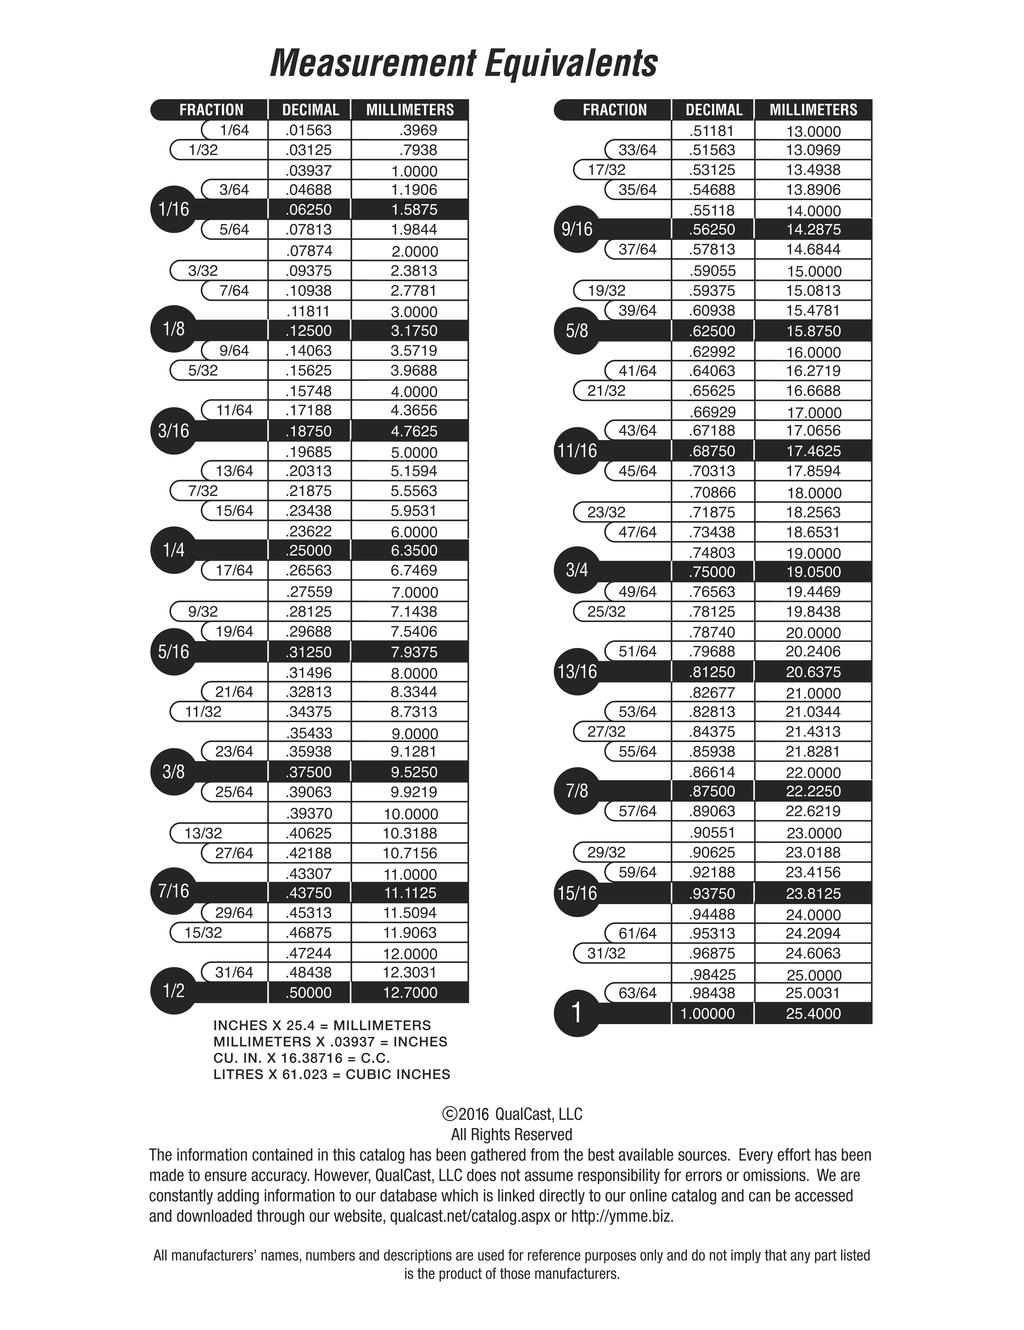 FIT HYUNDAI BEARINGS SET For G4GF G4GM Tiburon Sonata Elantra 1.8L 2.0L Size 20